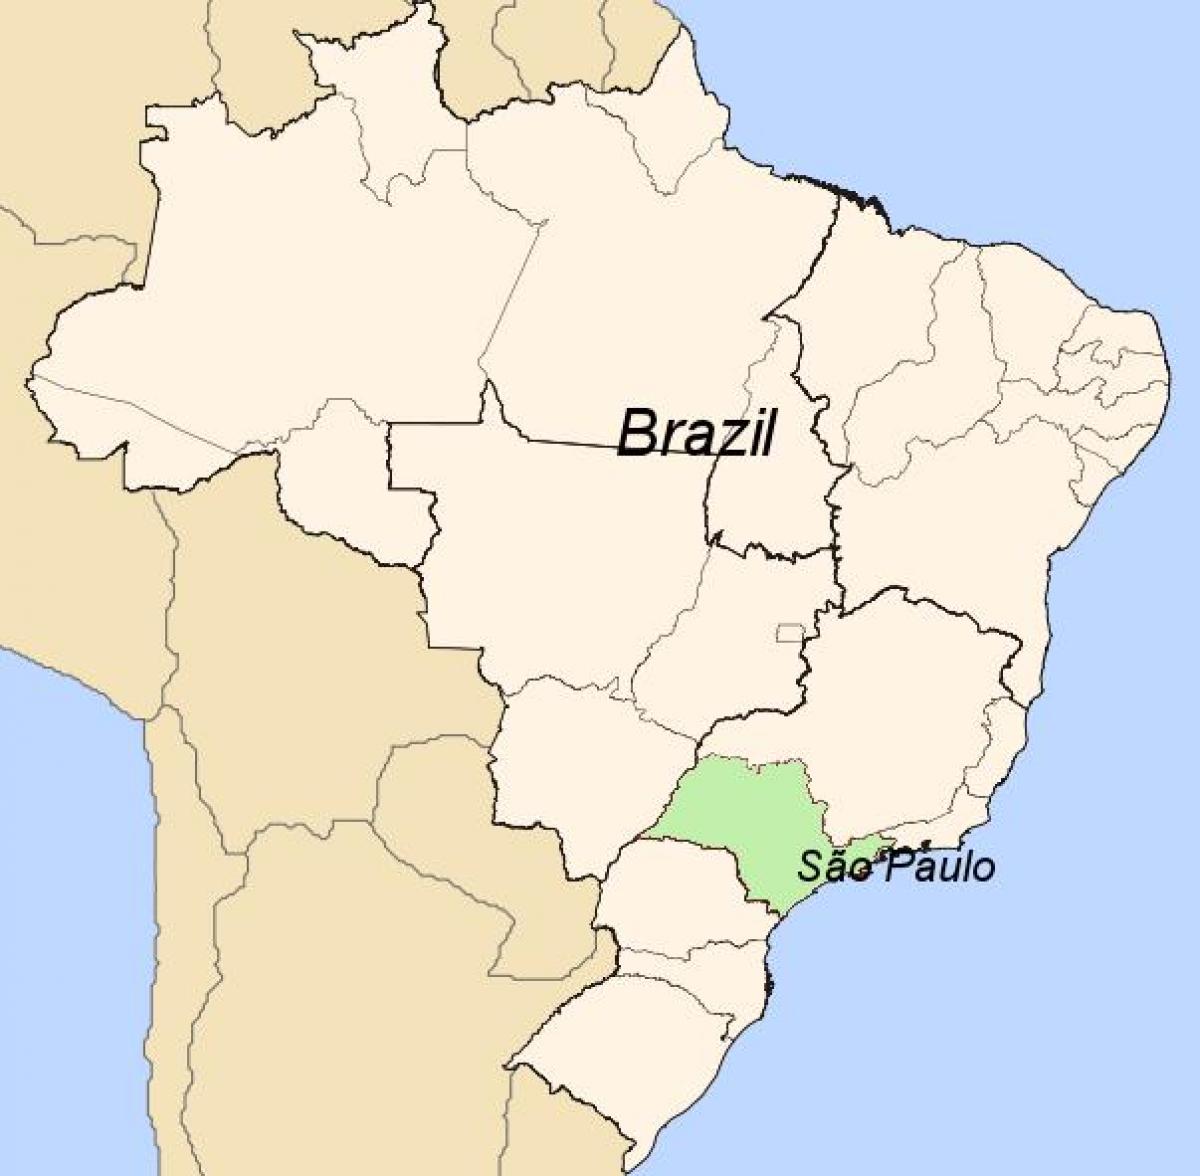 Karta za Sao Paolo na Brazil